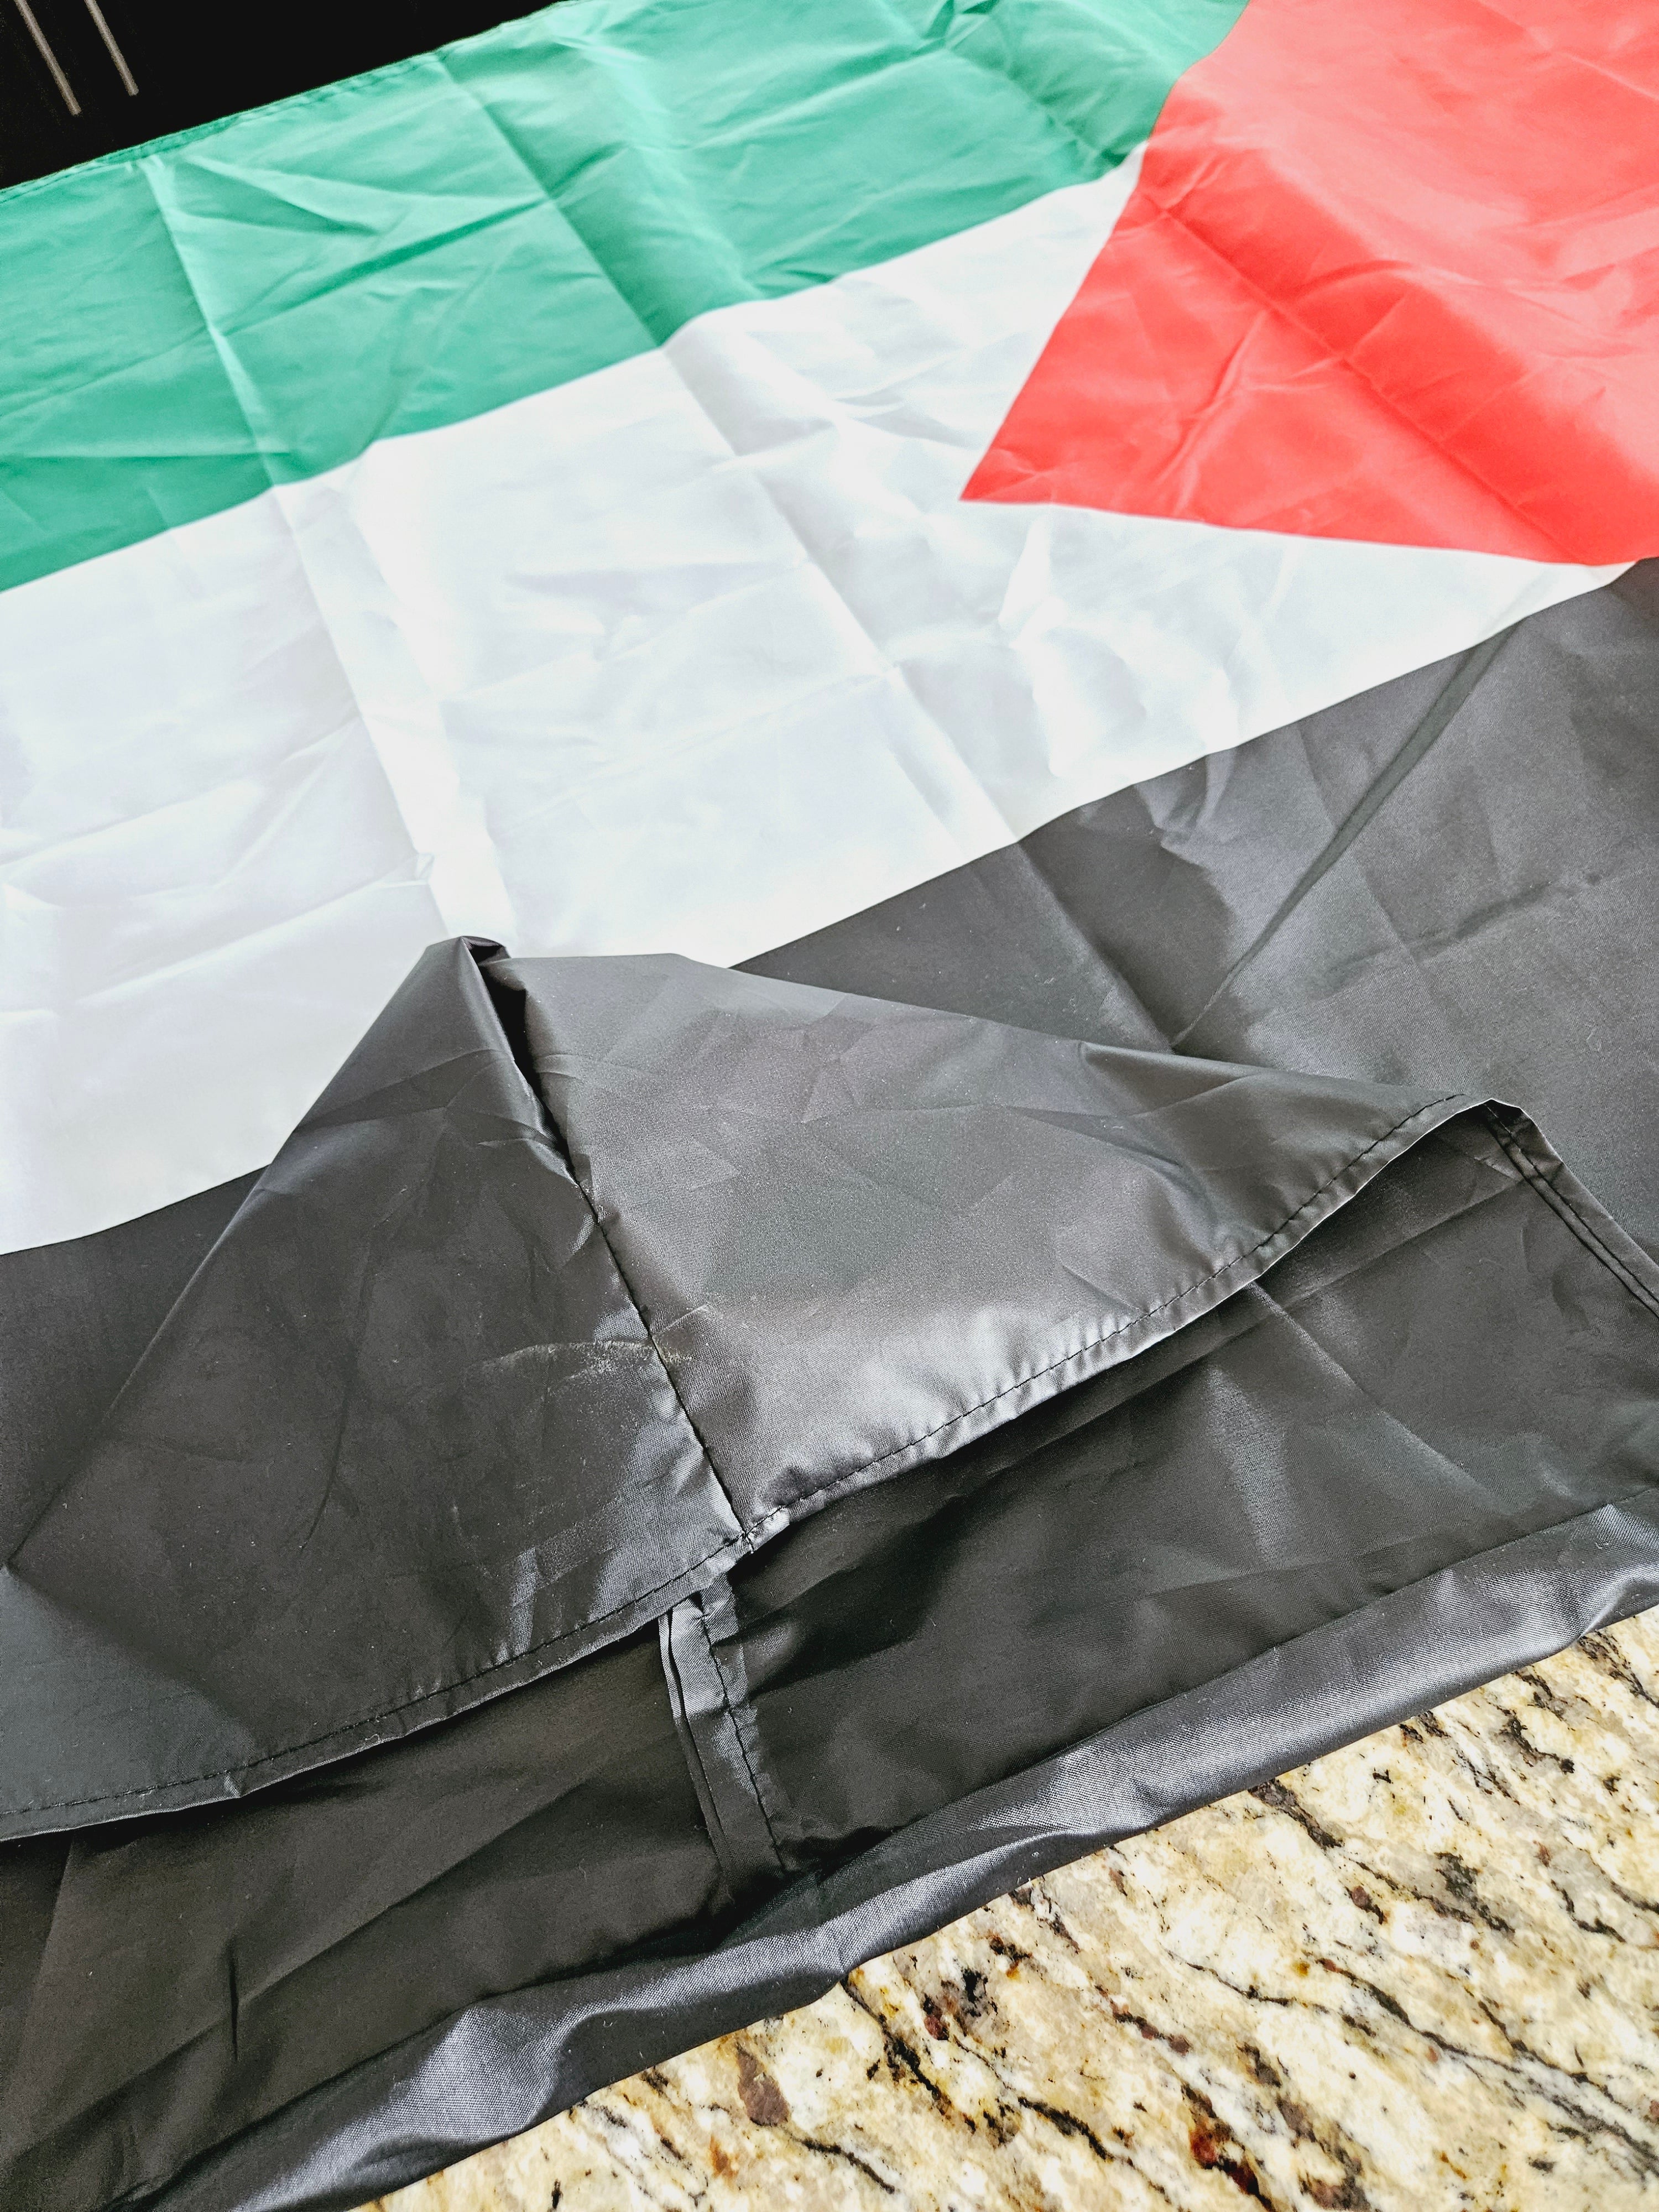 Palestine Cape Flag - Palestinian flag with hoodie and finger loops - Habibi Heritage